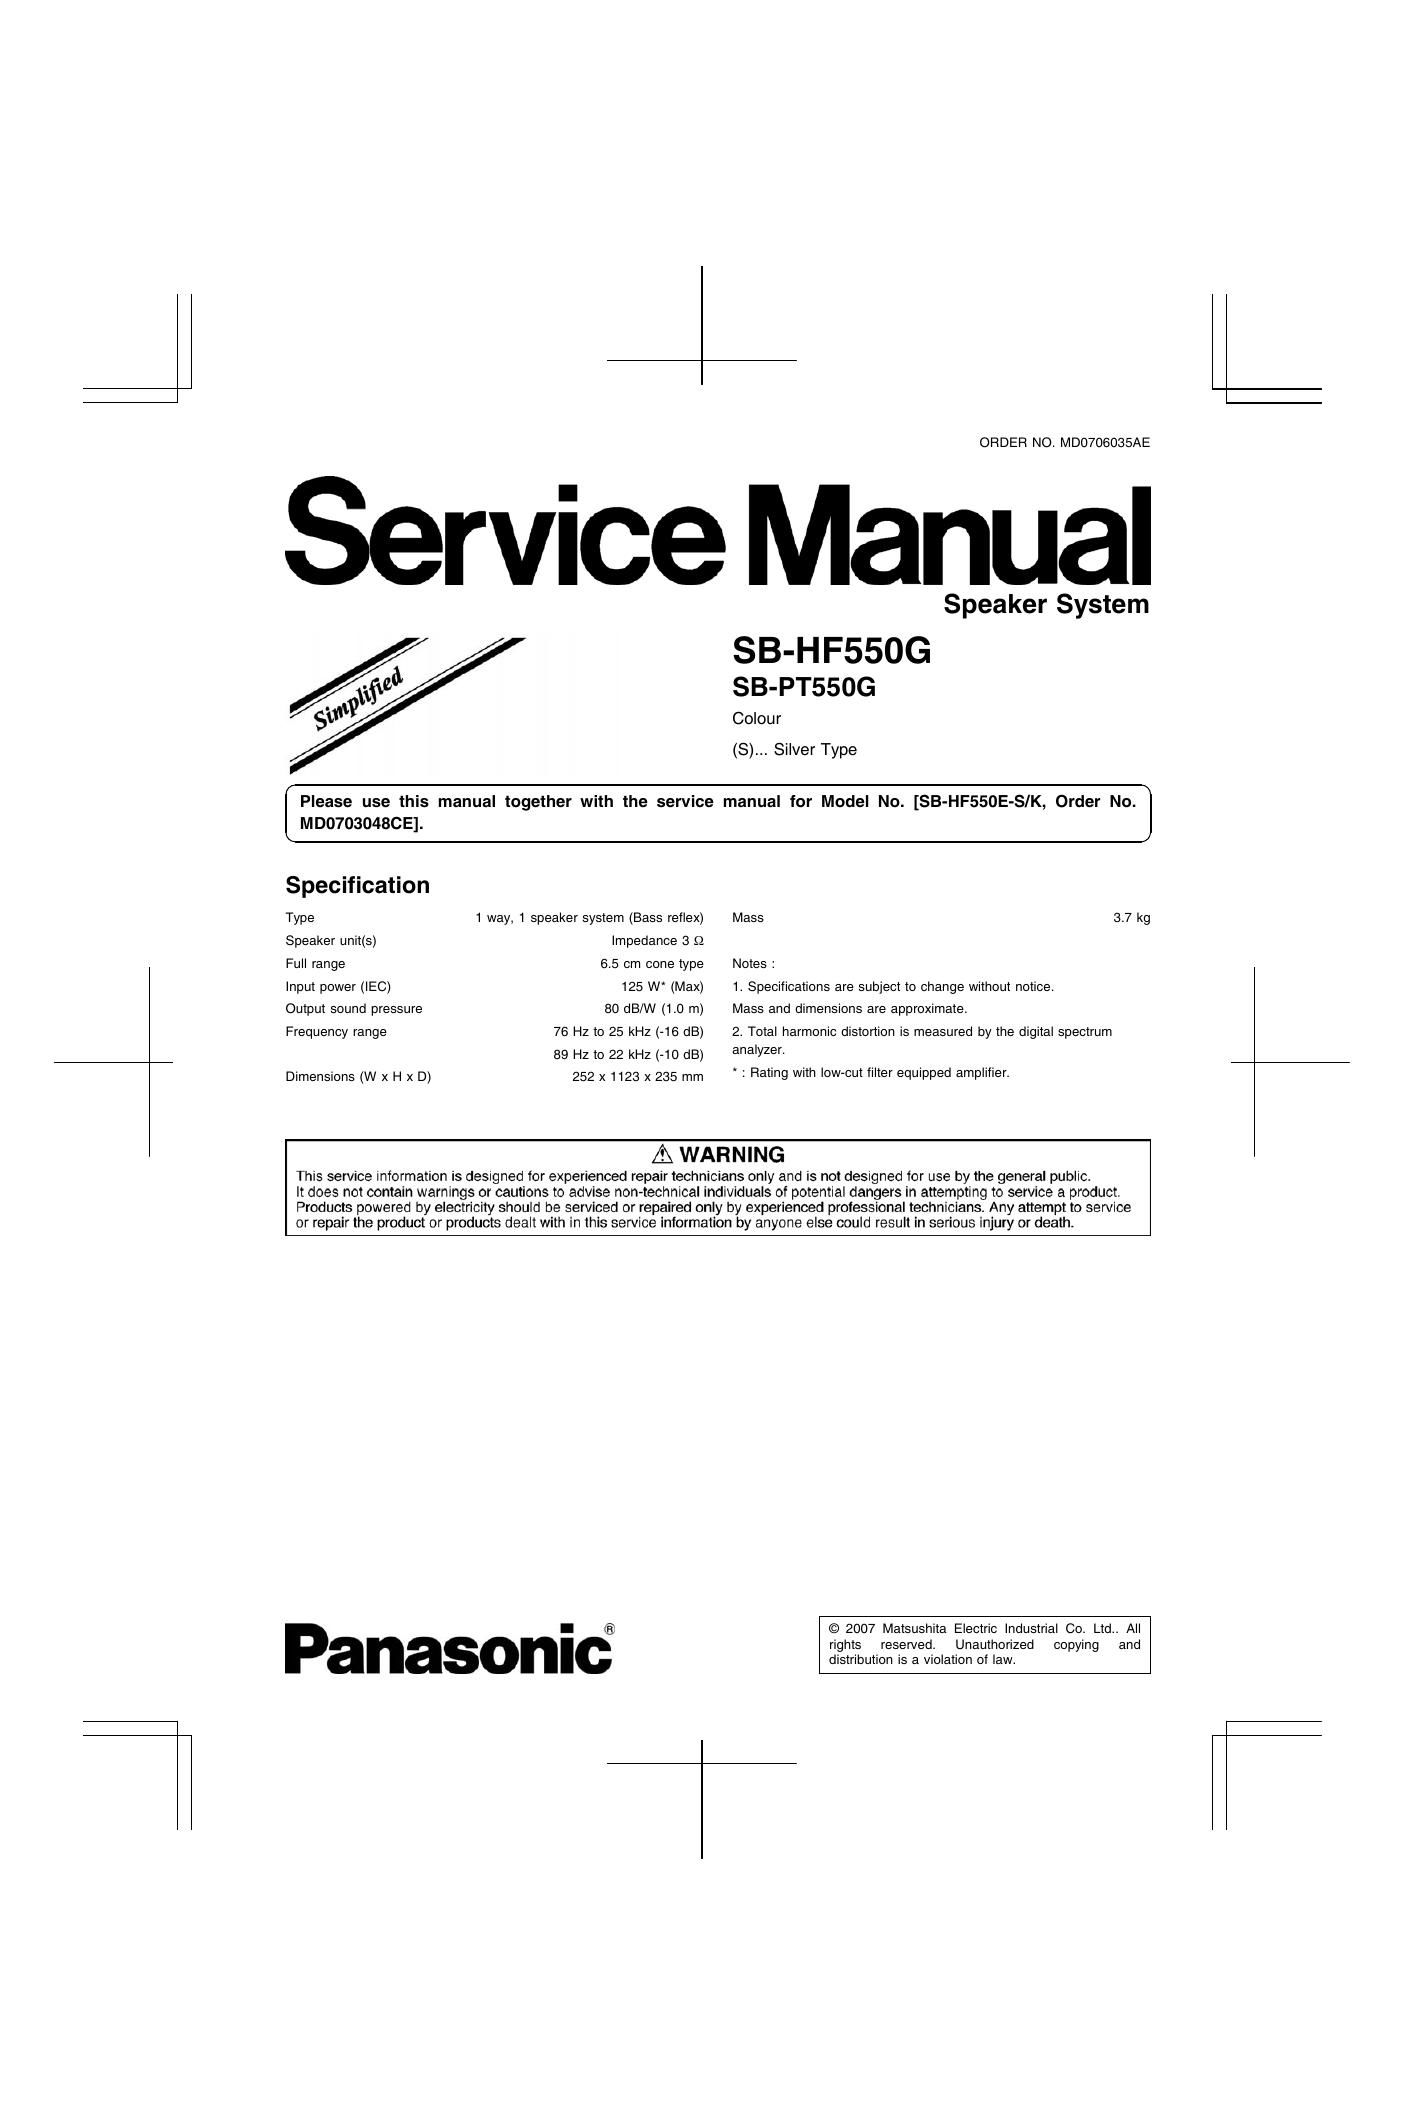 panasonic sb hf 550 g service manual